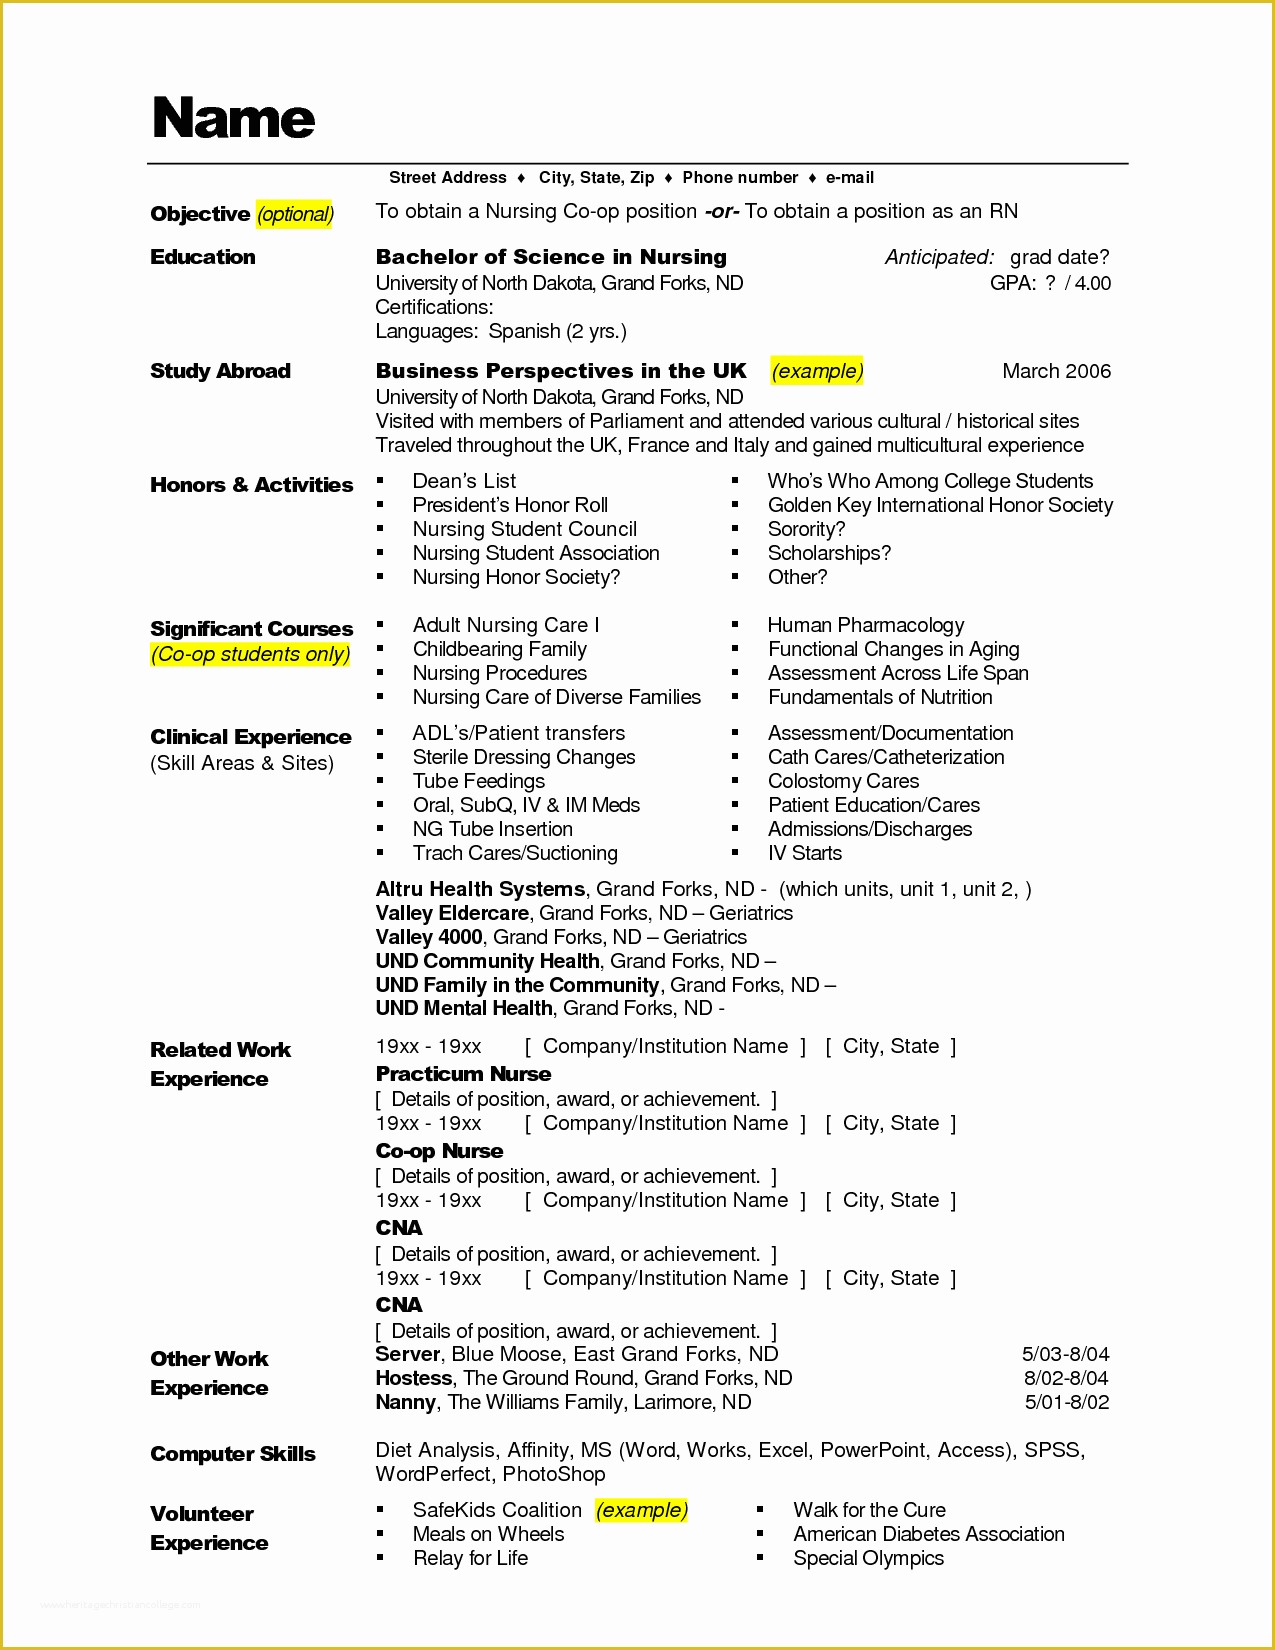 Free Resume Wizard Templates Of Awesome College Curriculum Template Baskanai Resume Wizard